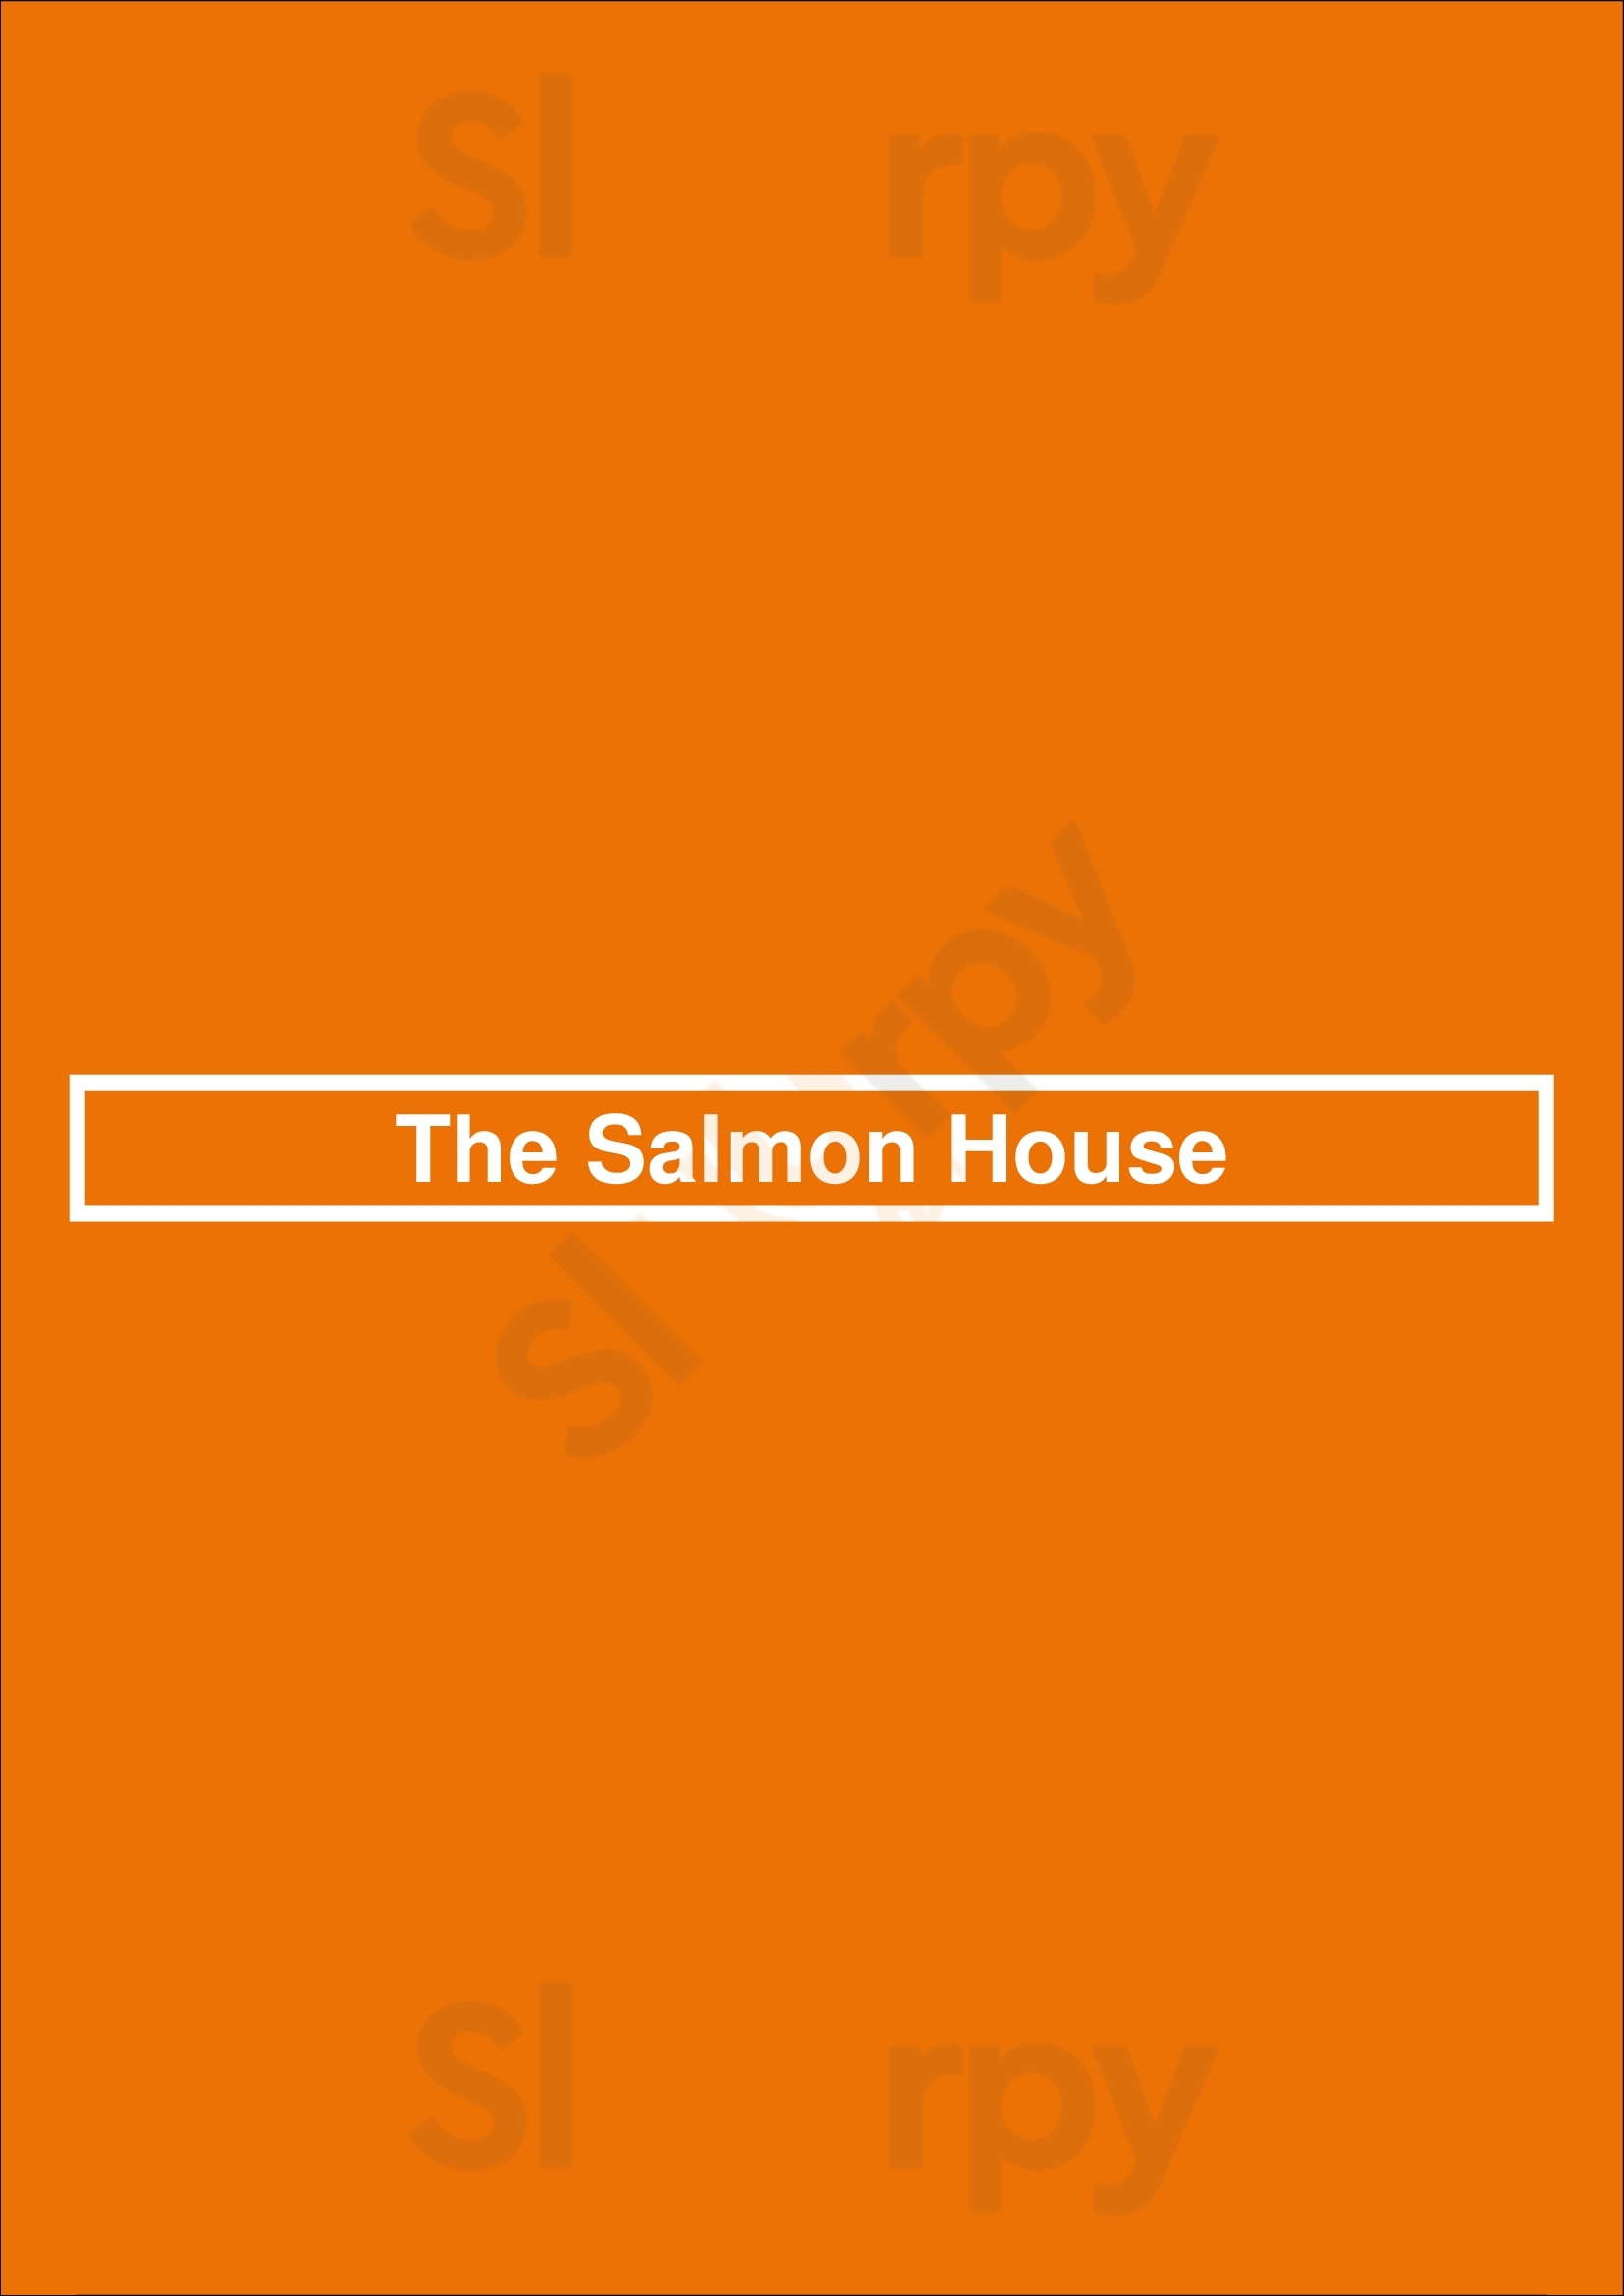 The Salmon House West Vancouver Menu - 1